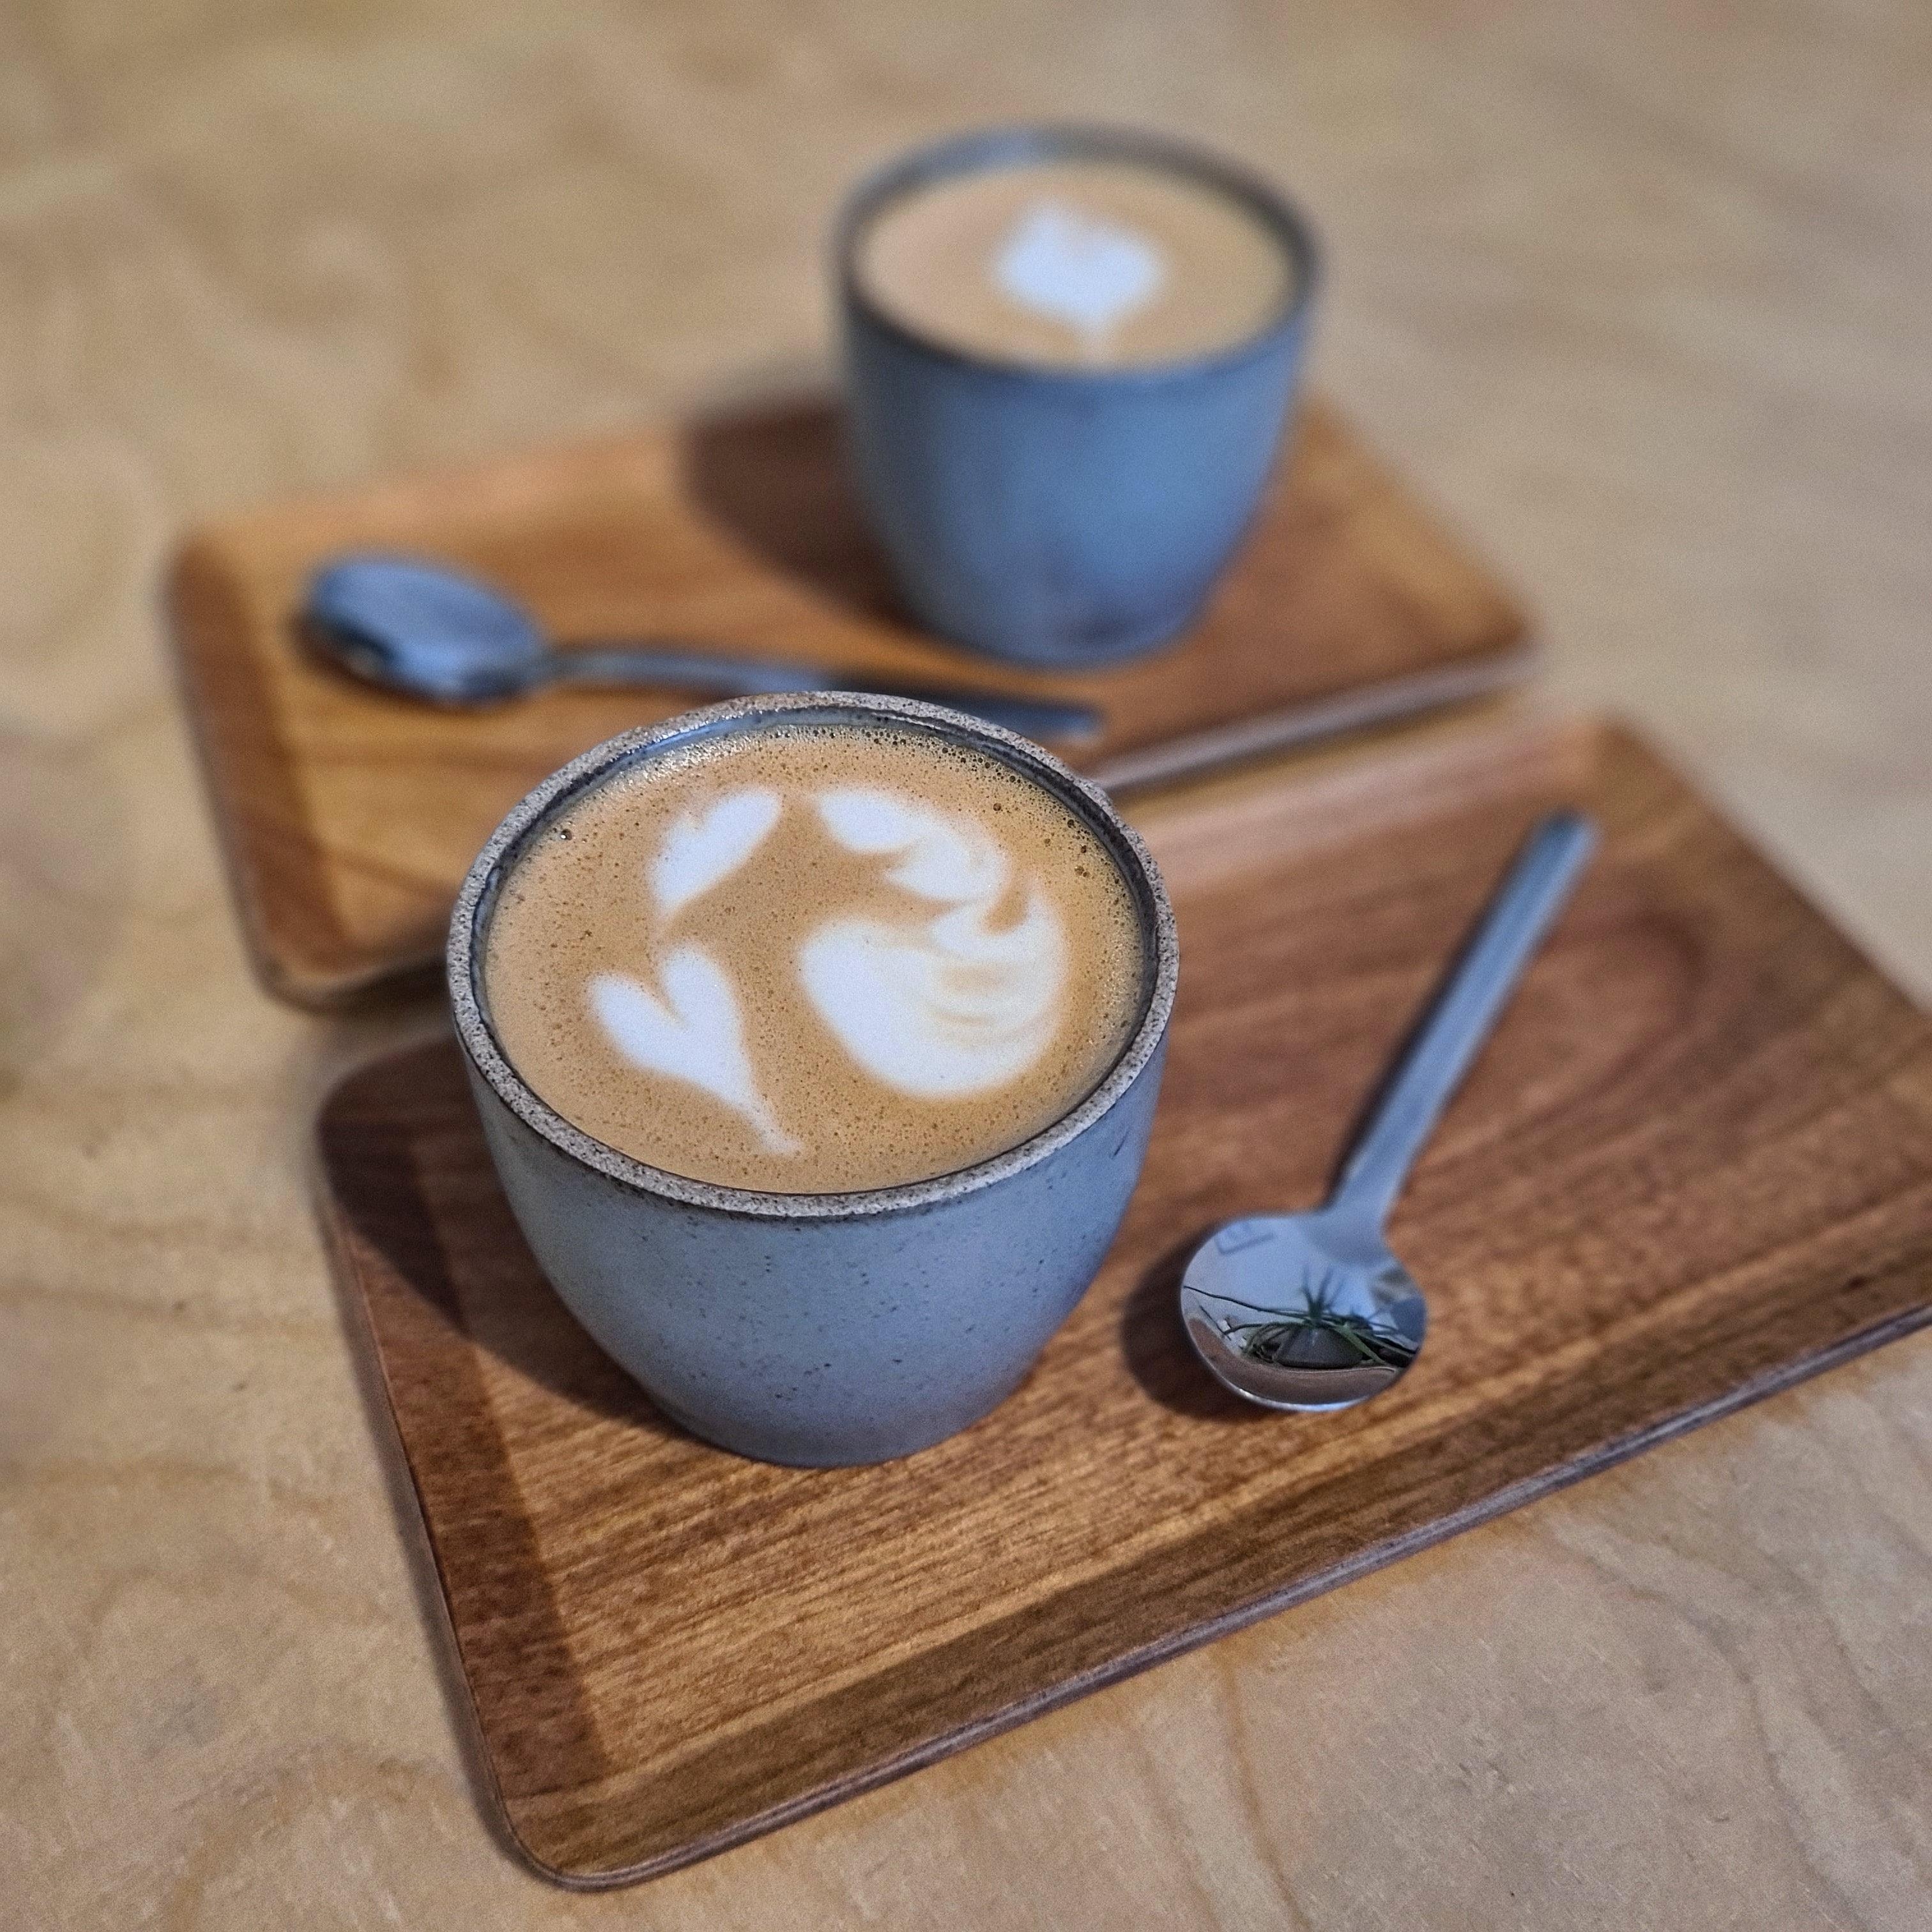 große kaffeeliebe 🤍 #kaffeehilft #foodchallenge